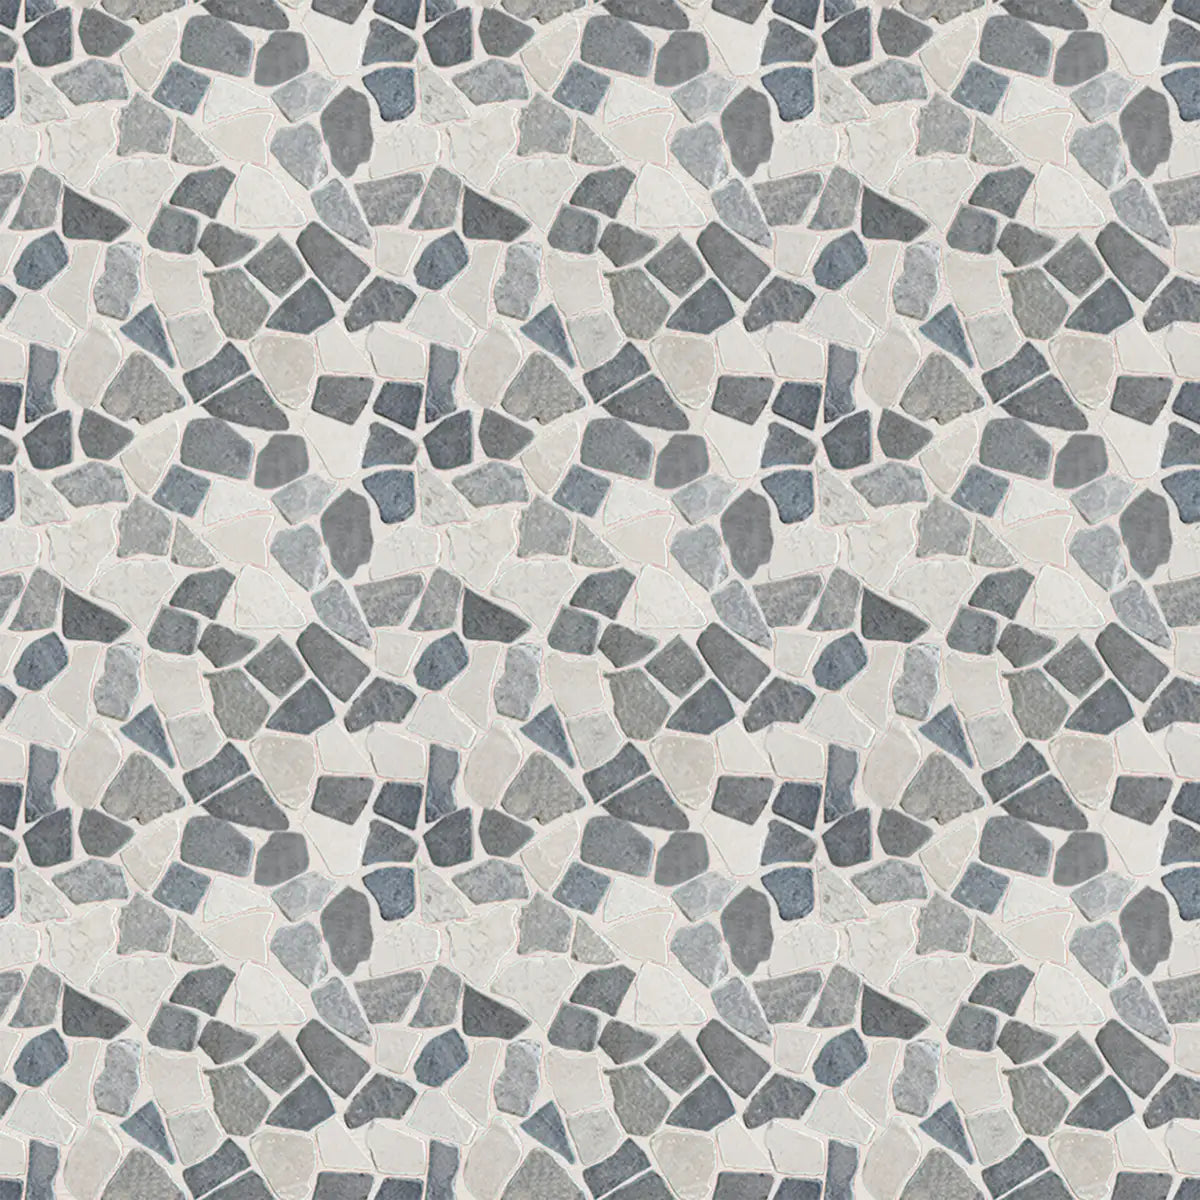 Mosaic tile mix grey marble irregular for bathroom